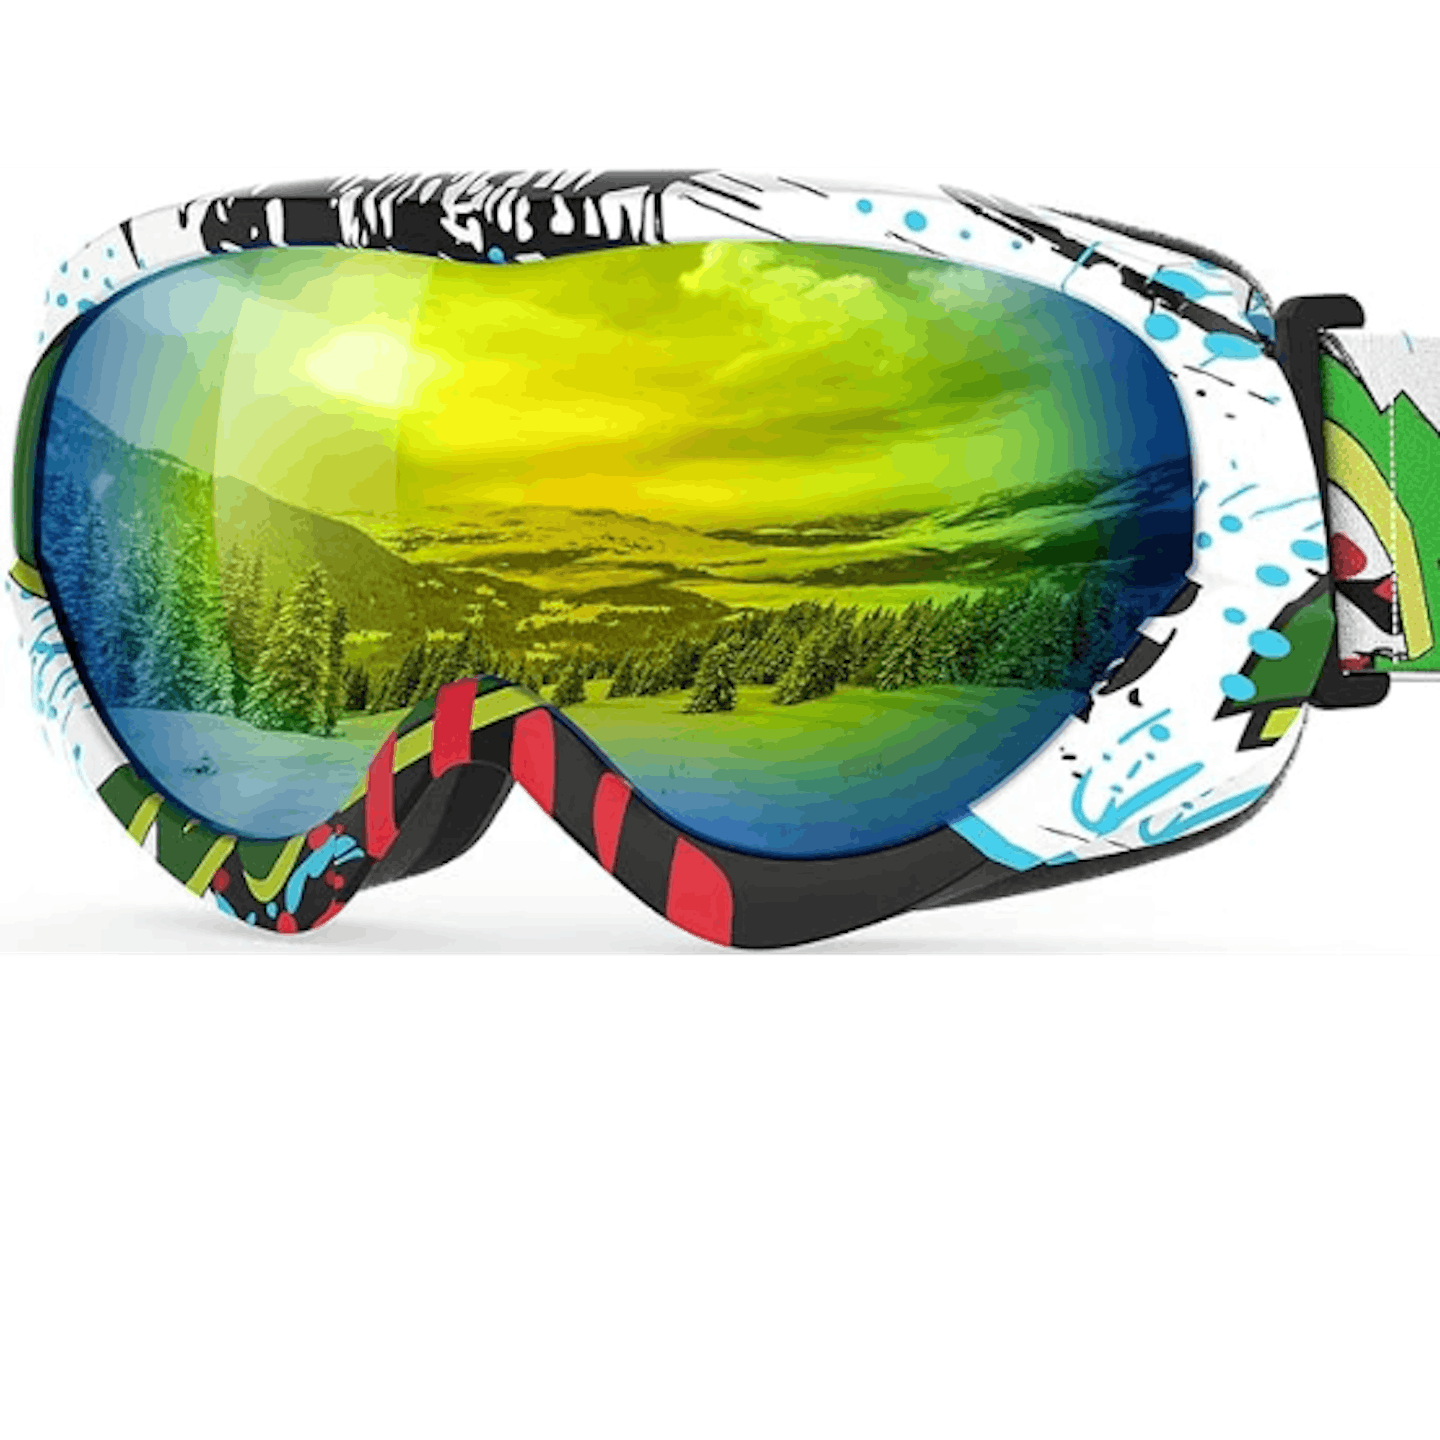 Outdoor master ski goggles